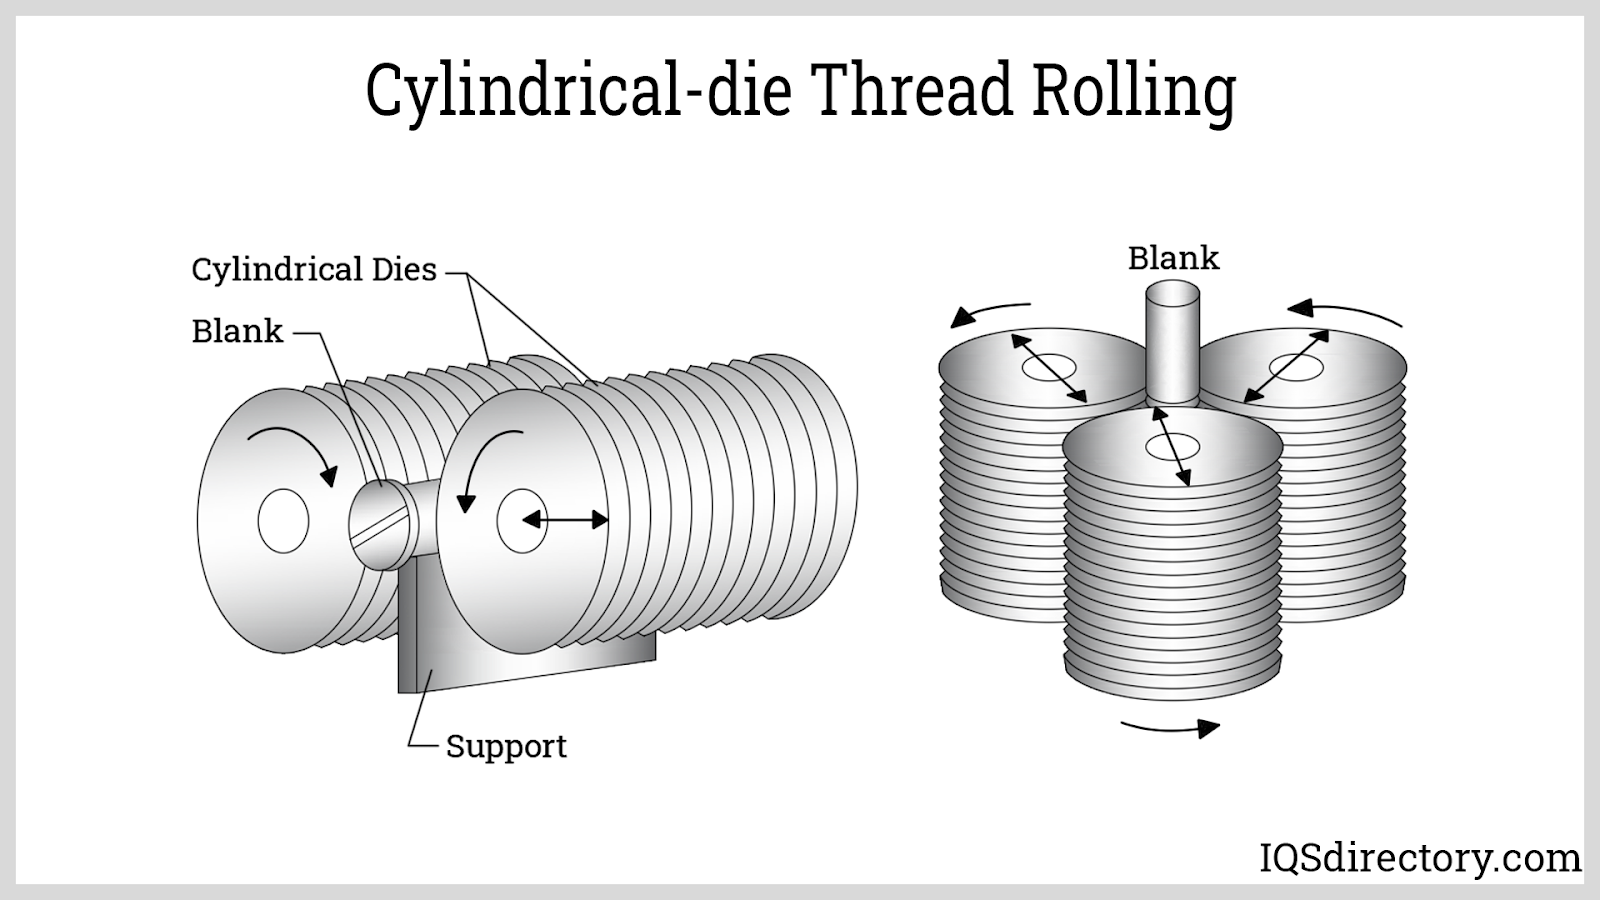 Cylindrical-die Thread Rolling